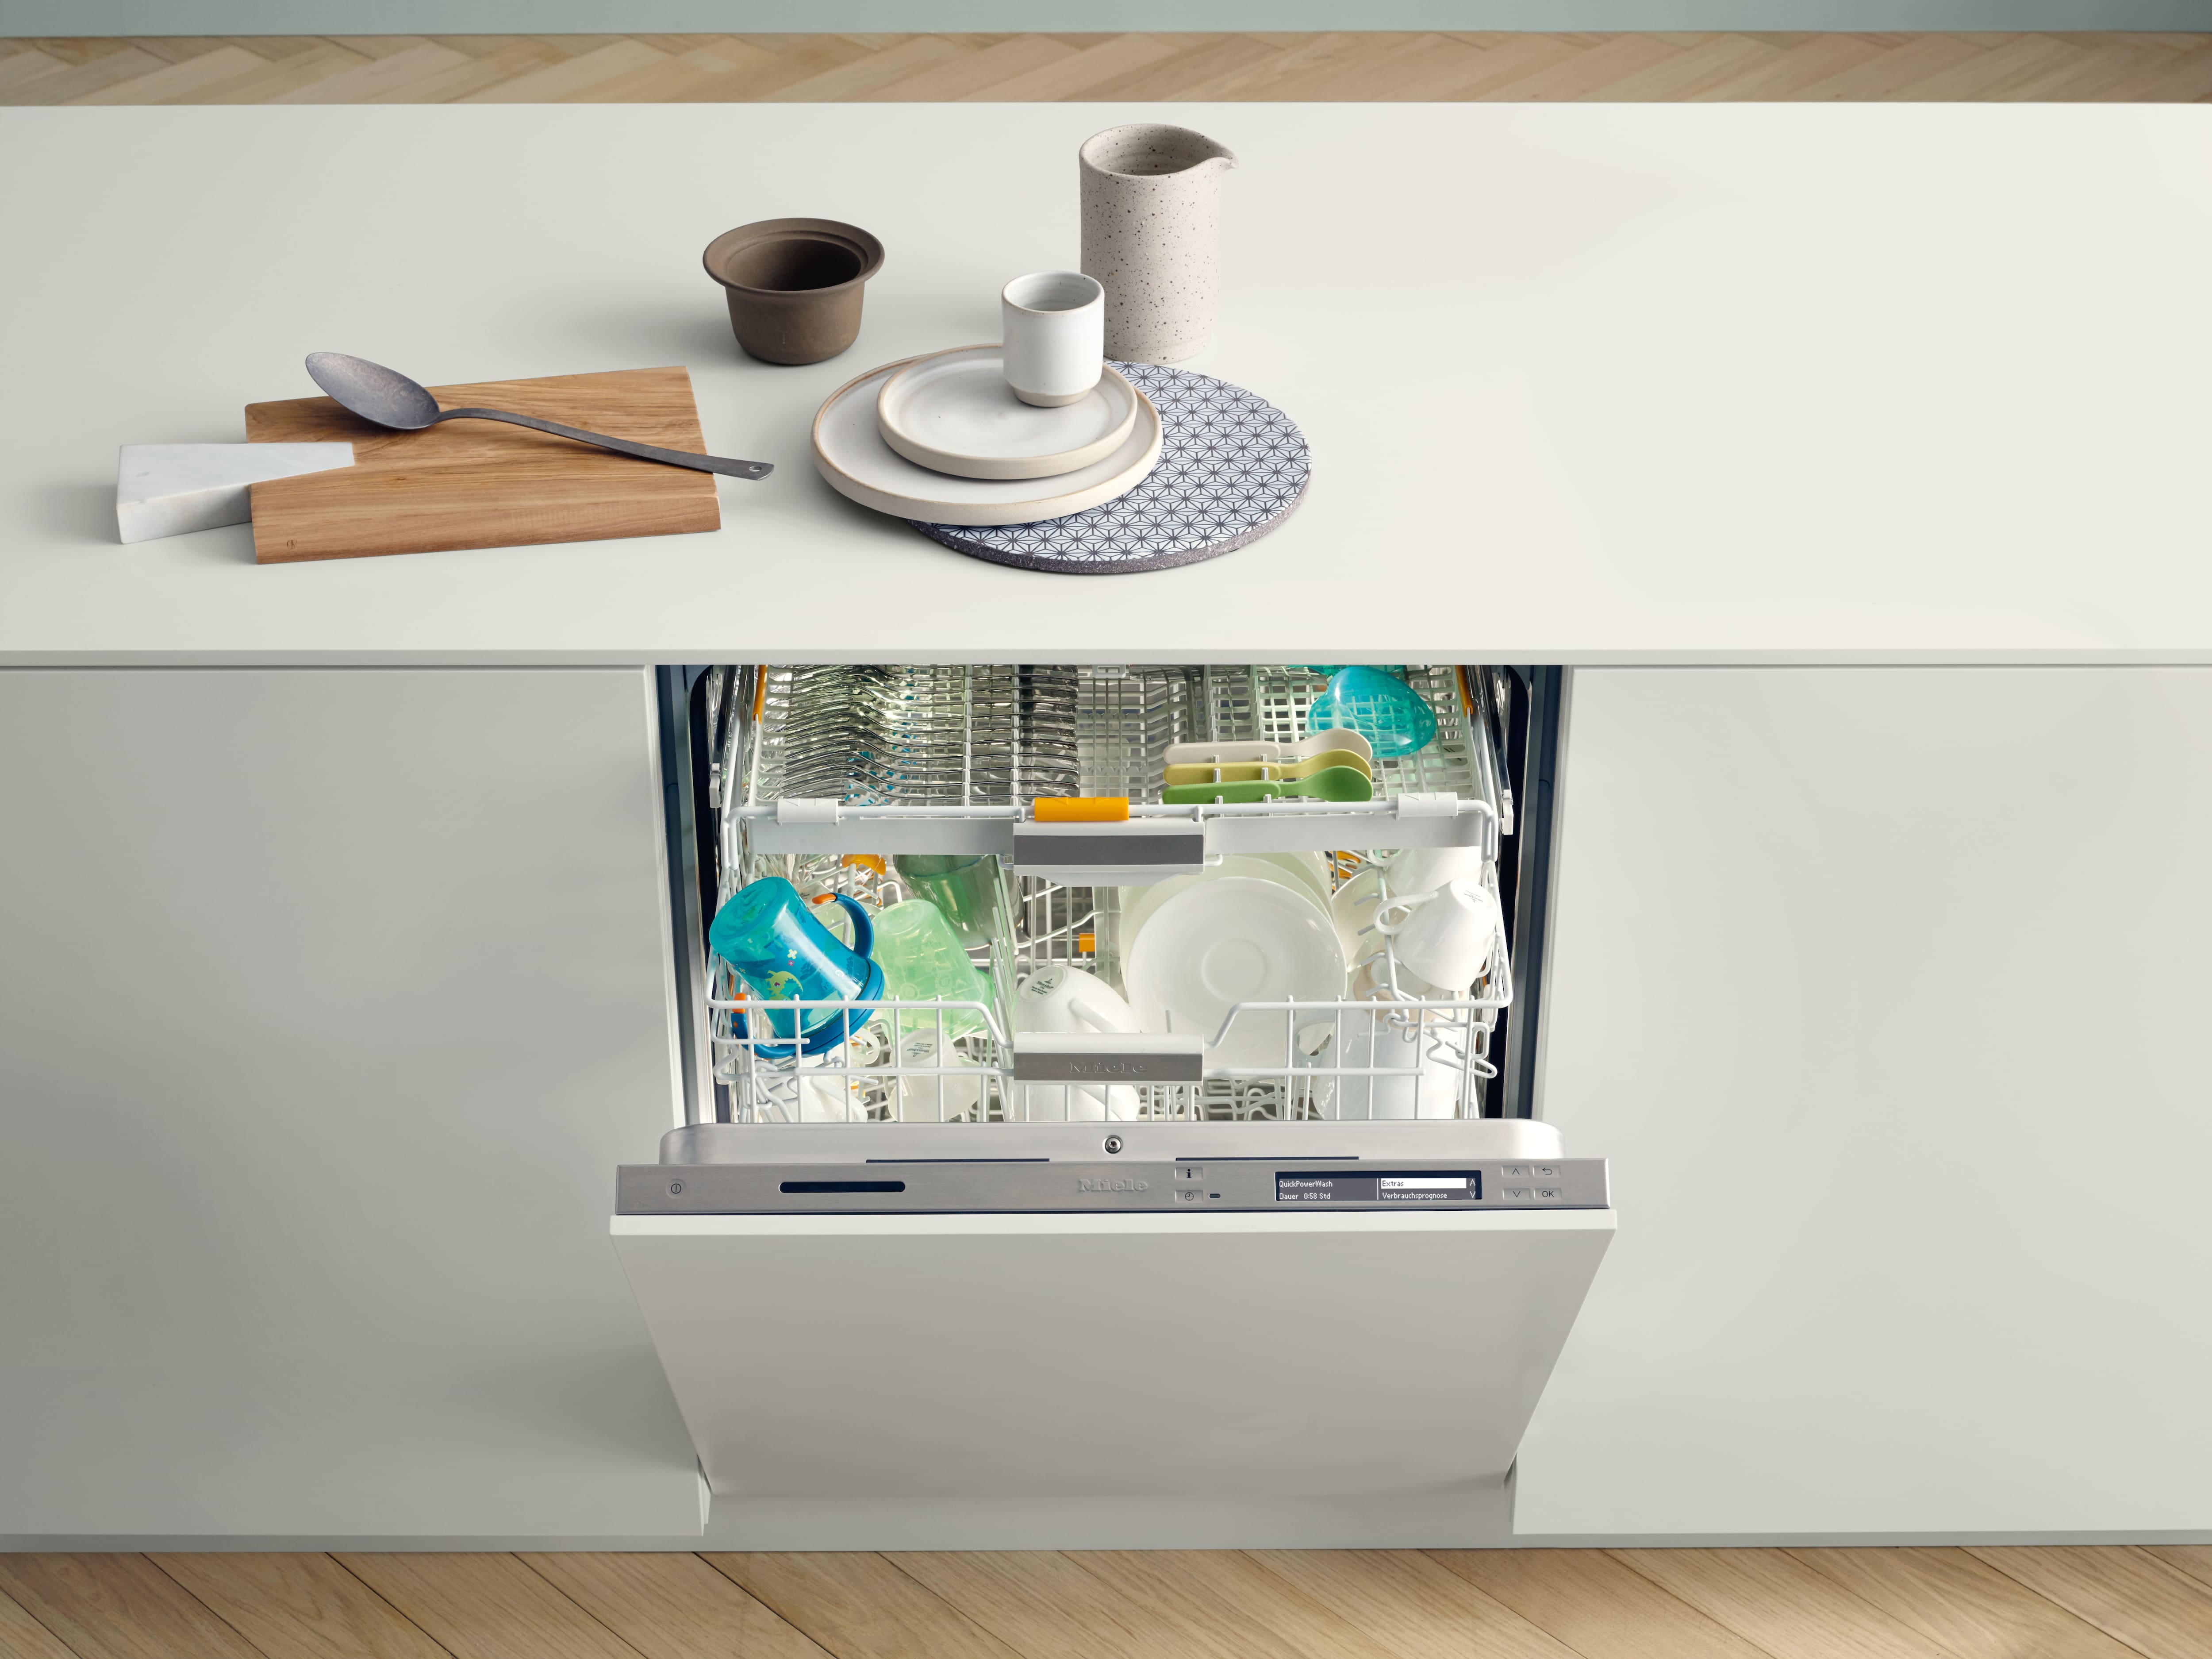 miele dishwasher freestanding